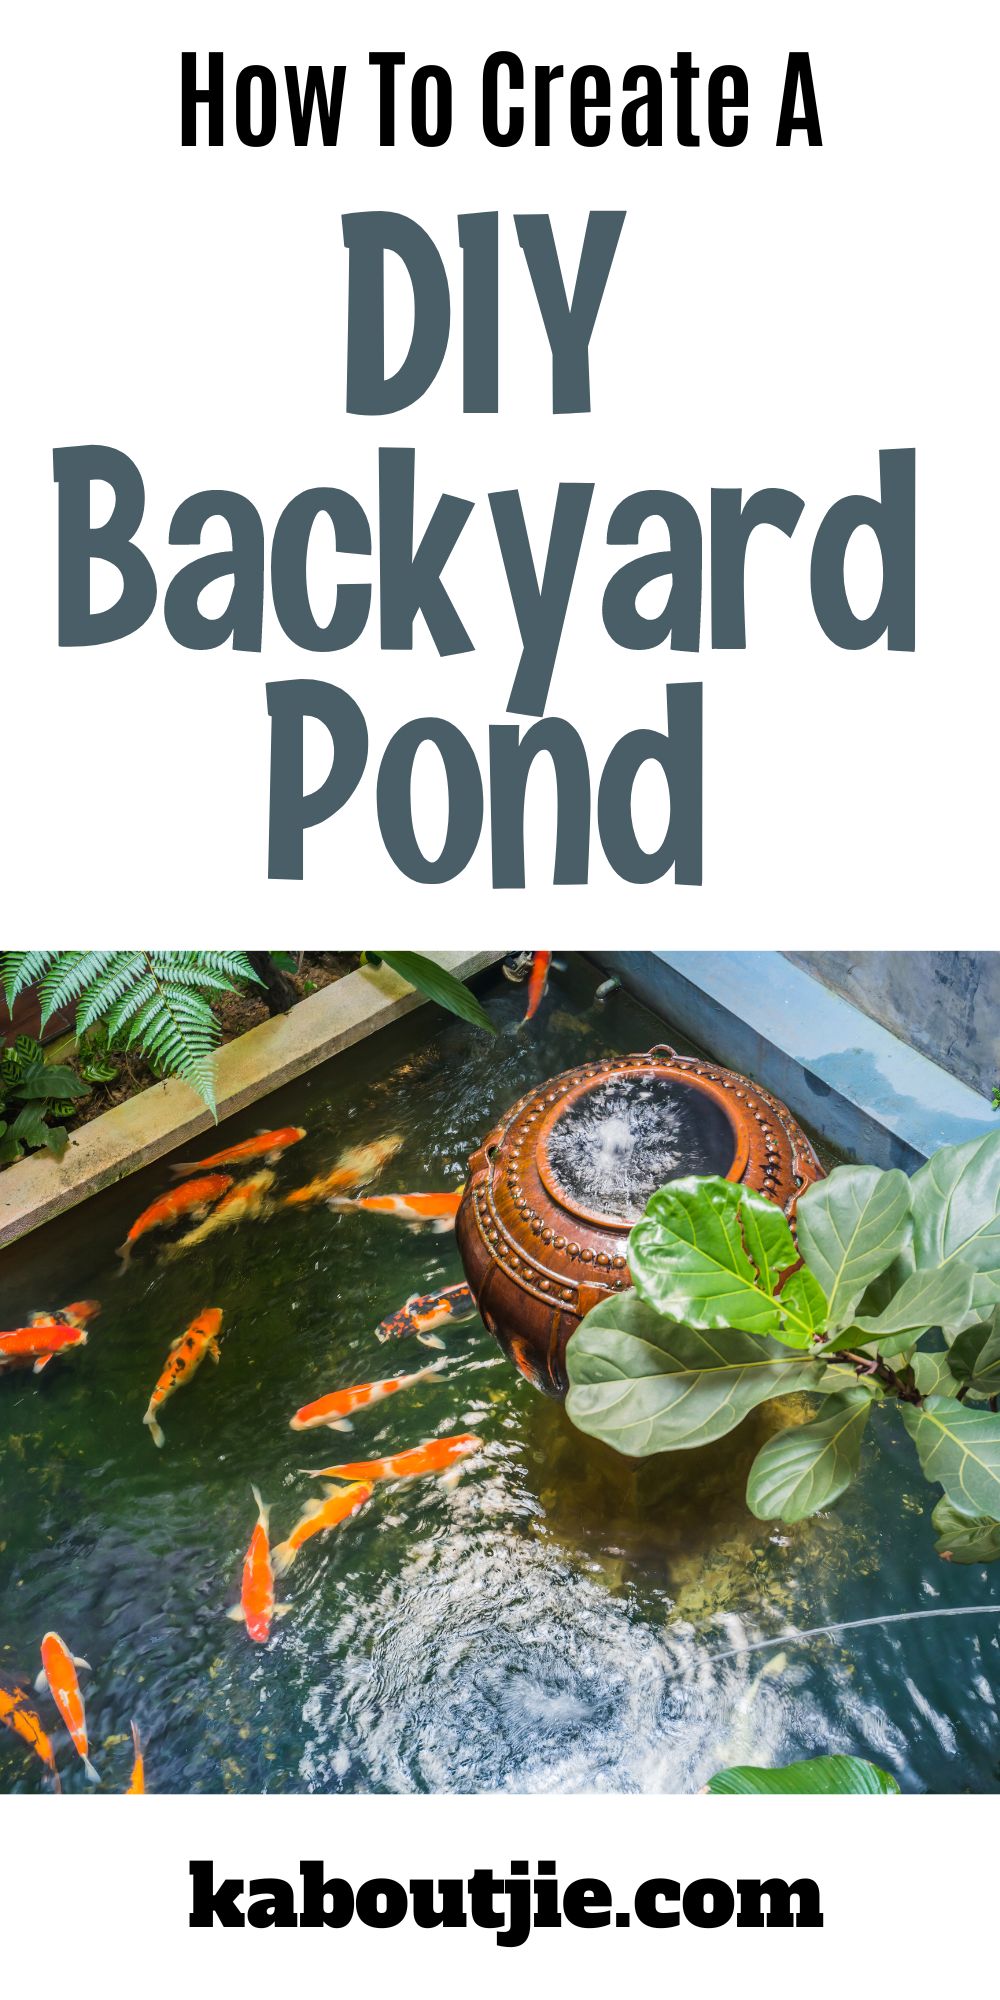 How To Create A DIY Backyard Pond